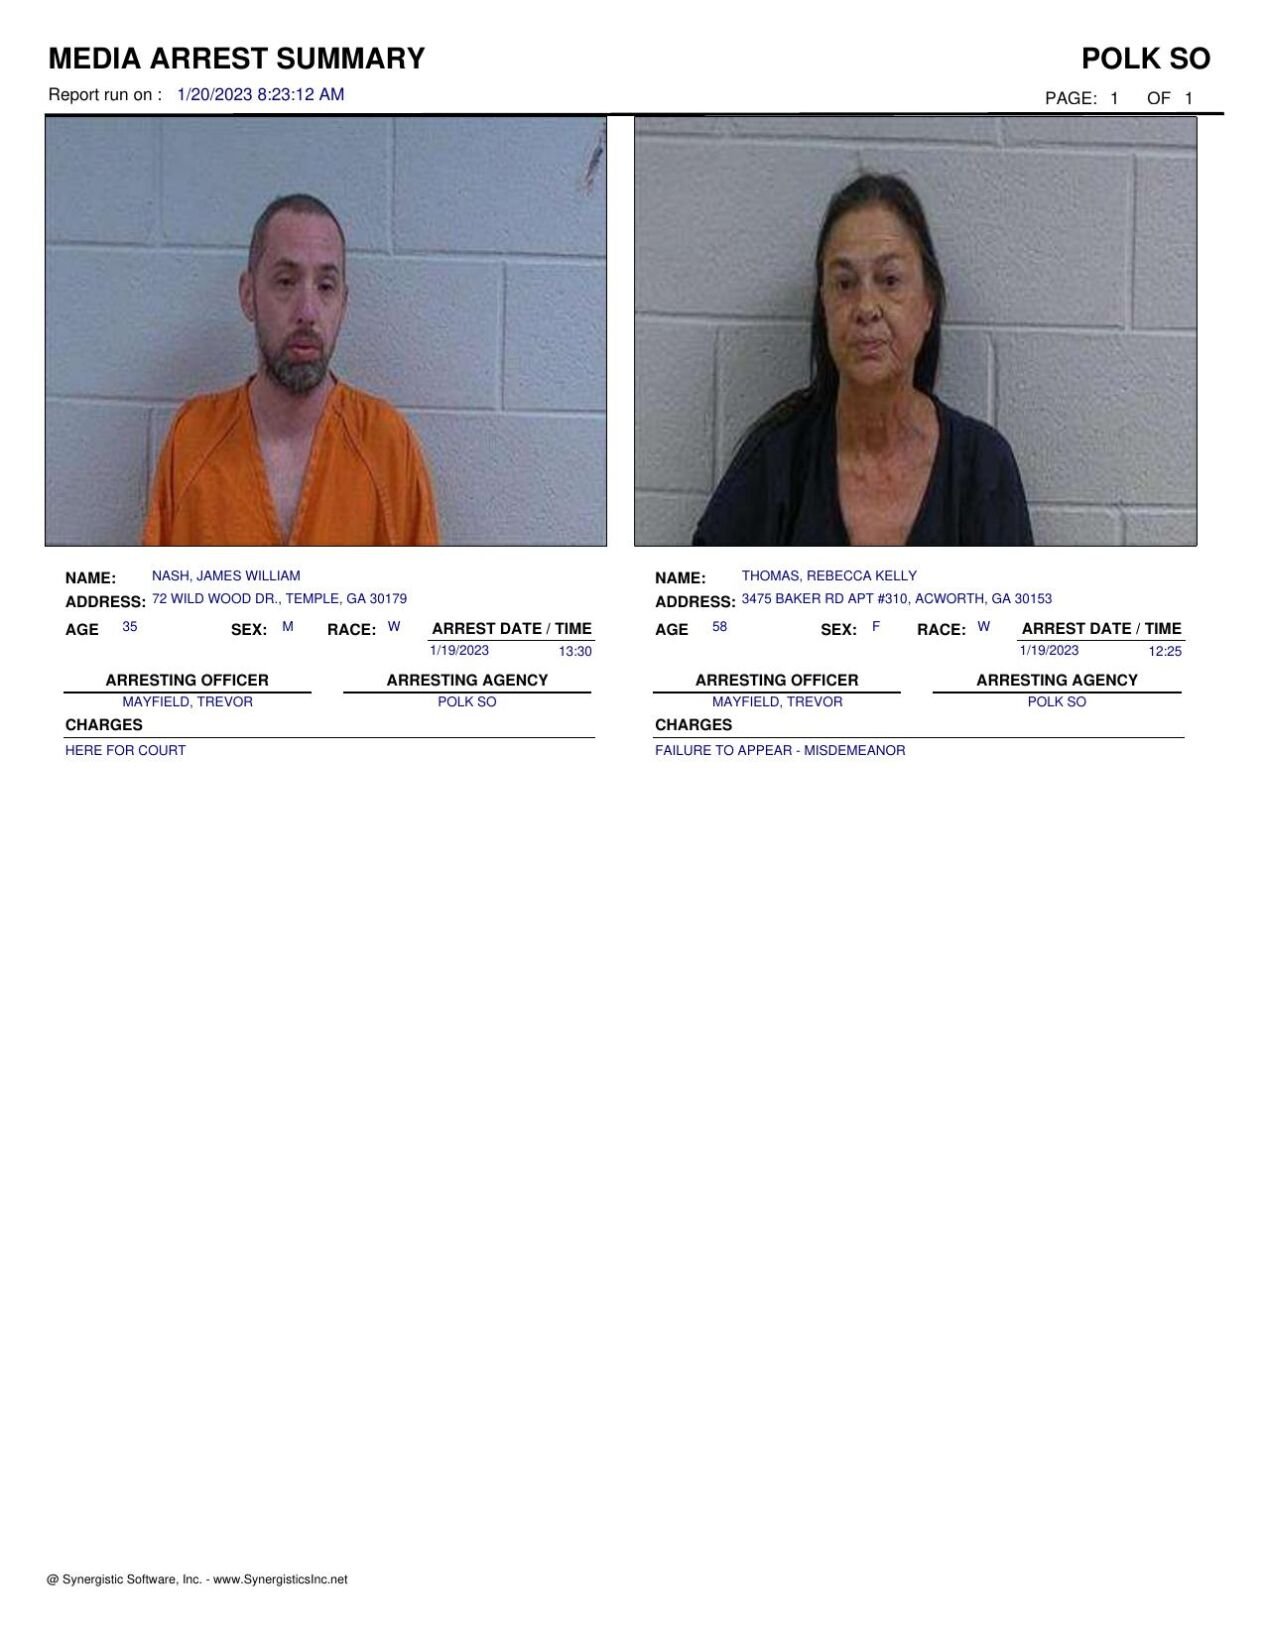 Polk County Jail Report for Friday, Jan. 20